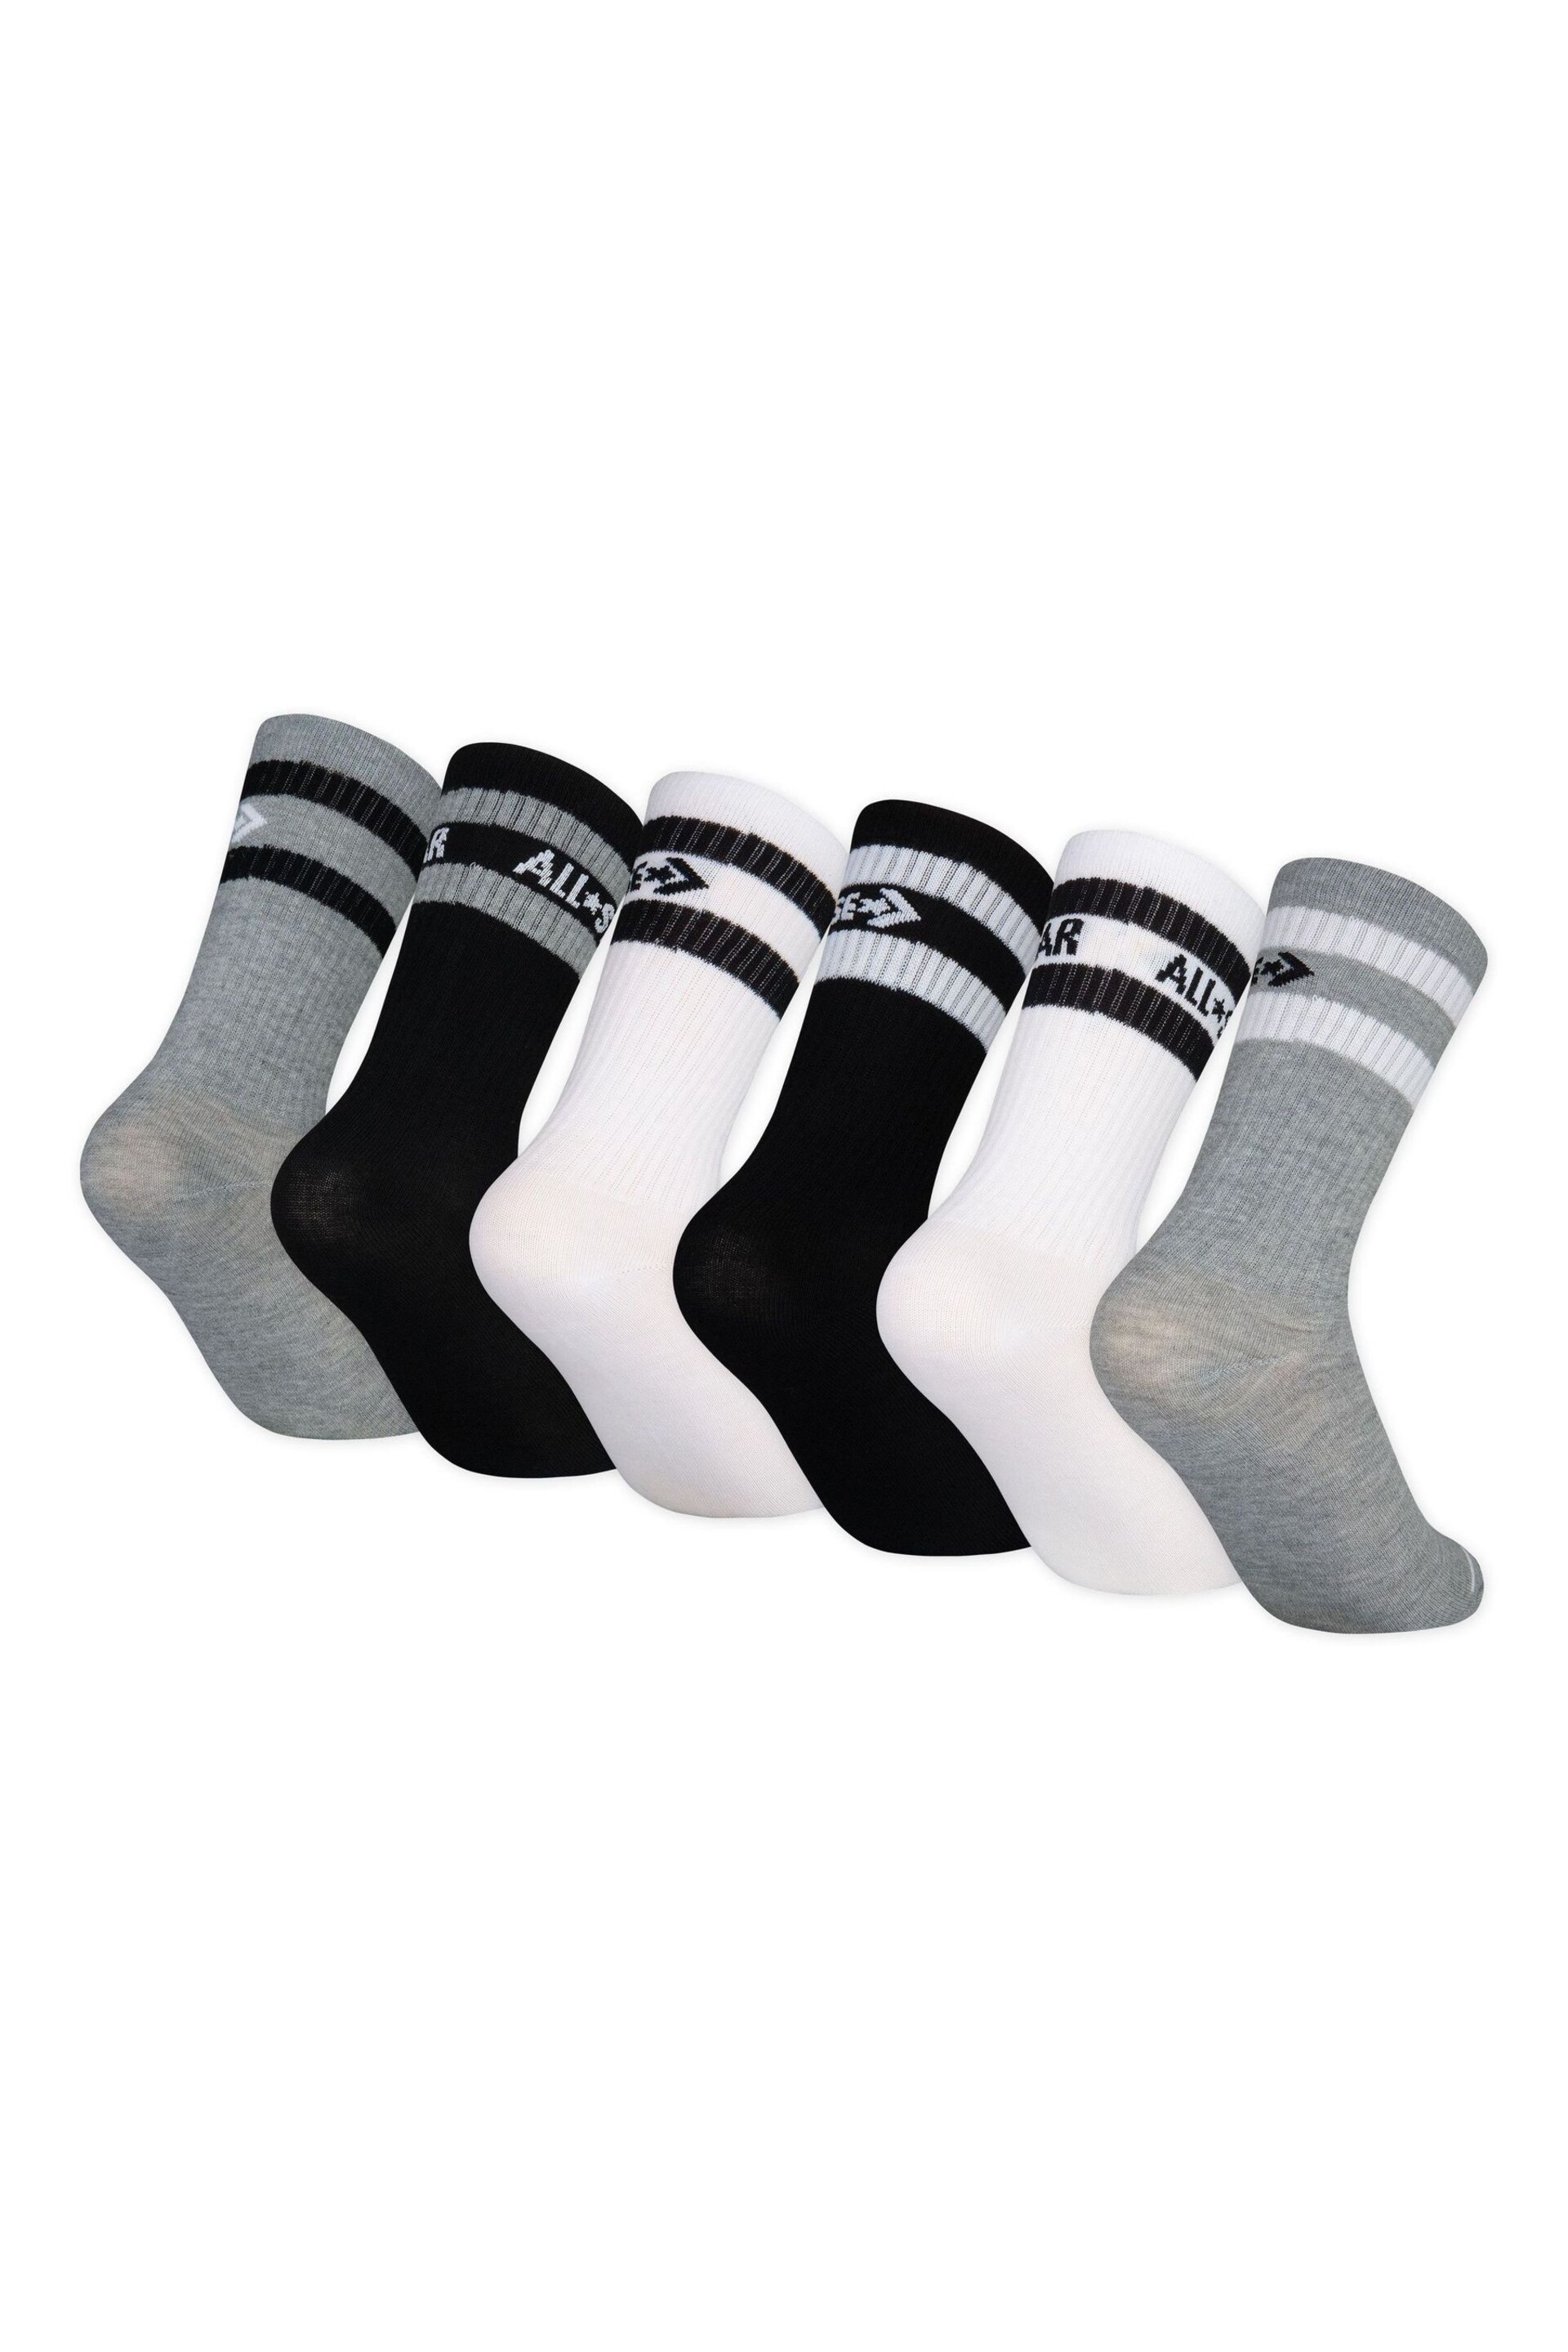 Converse Grey Crew Sock 6 Pack - Image 2 of 3